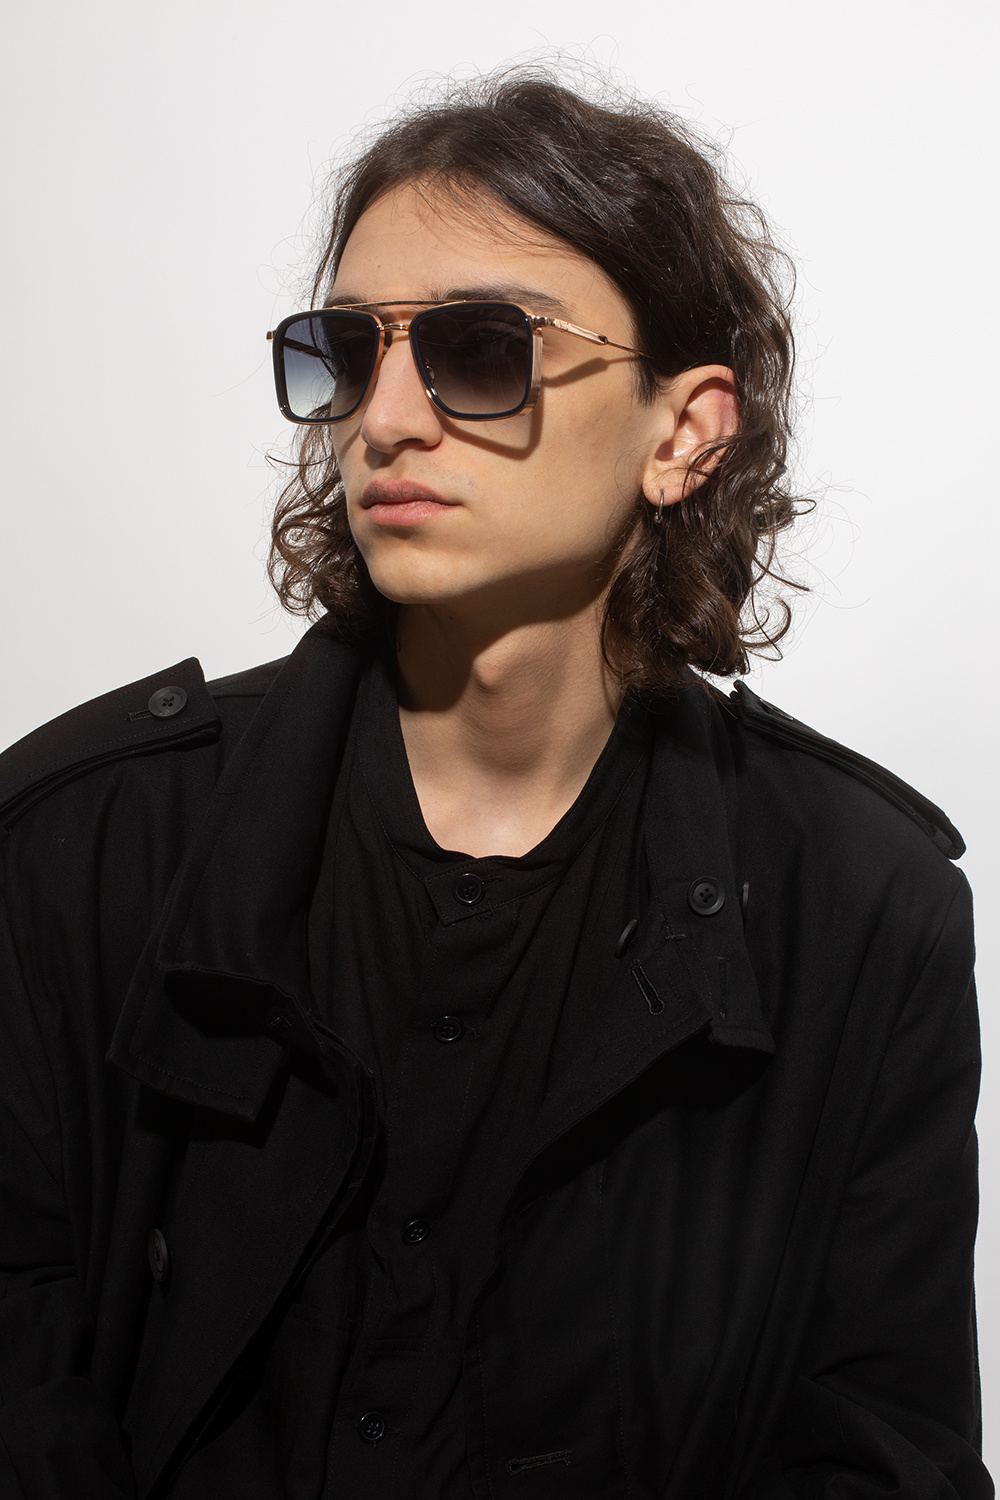 John Dalia ‘Brad’ Eyewear sunglasses